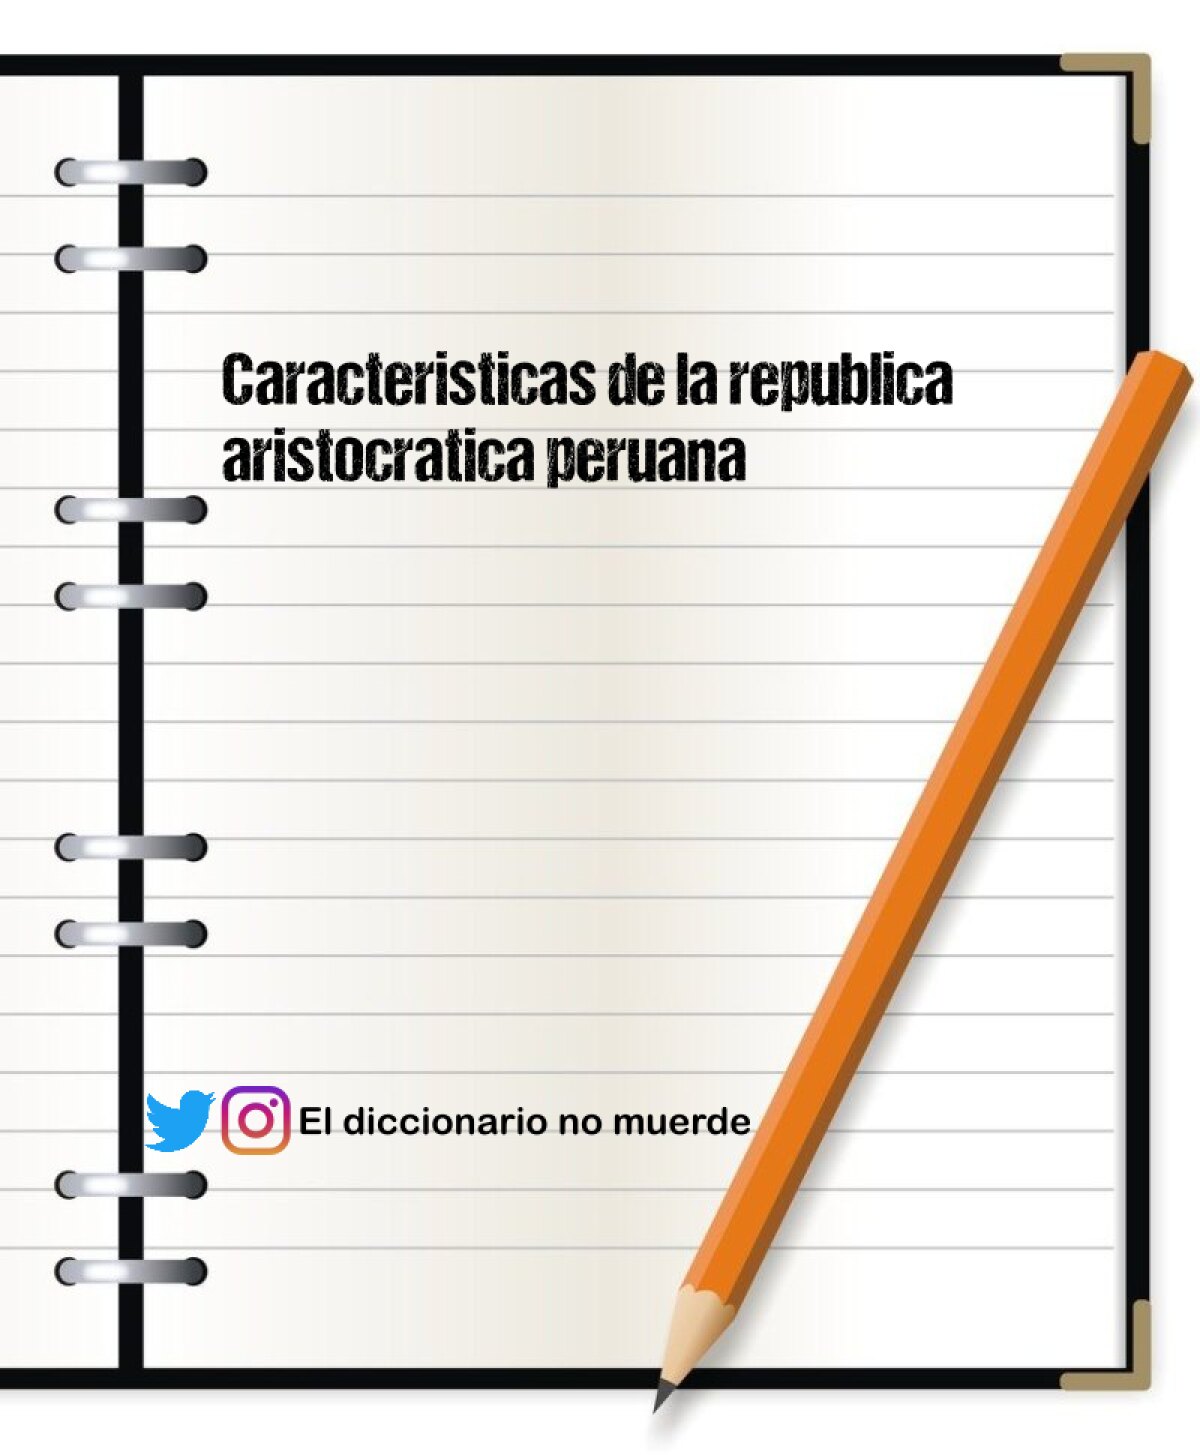 Caracteristicas de la republica aristocratica peruana